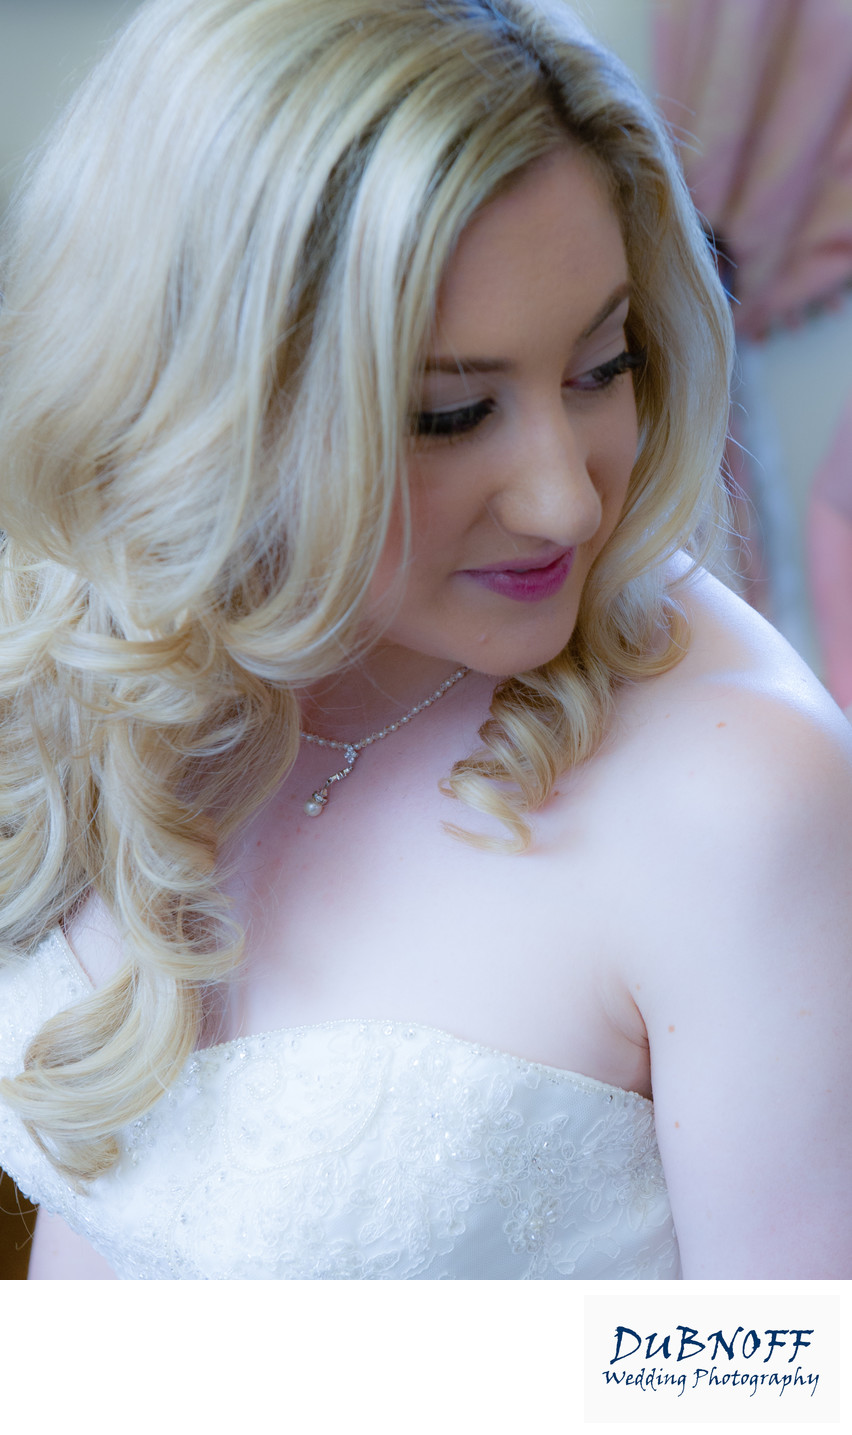 bride looking over shoulder during portrait photography